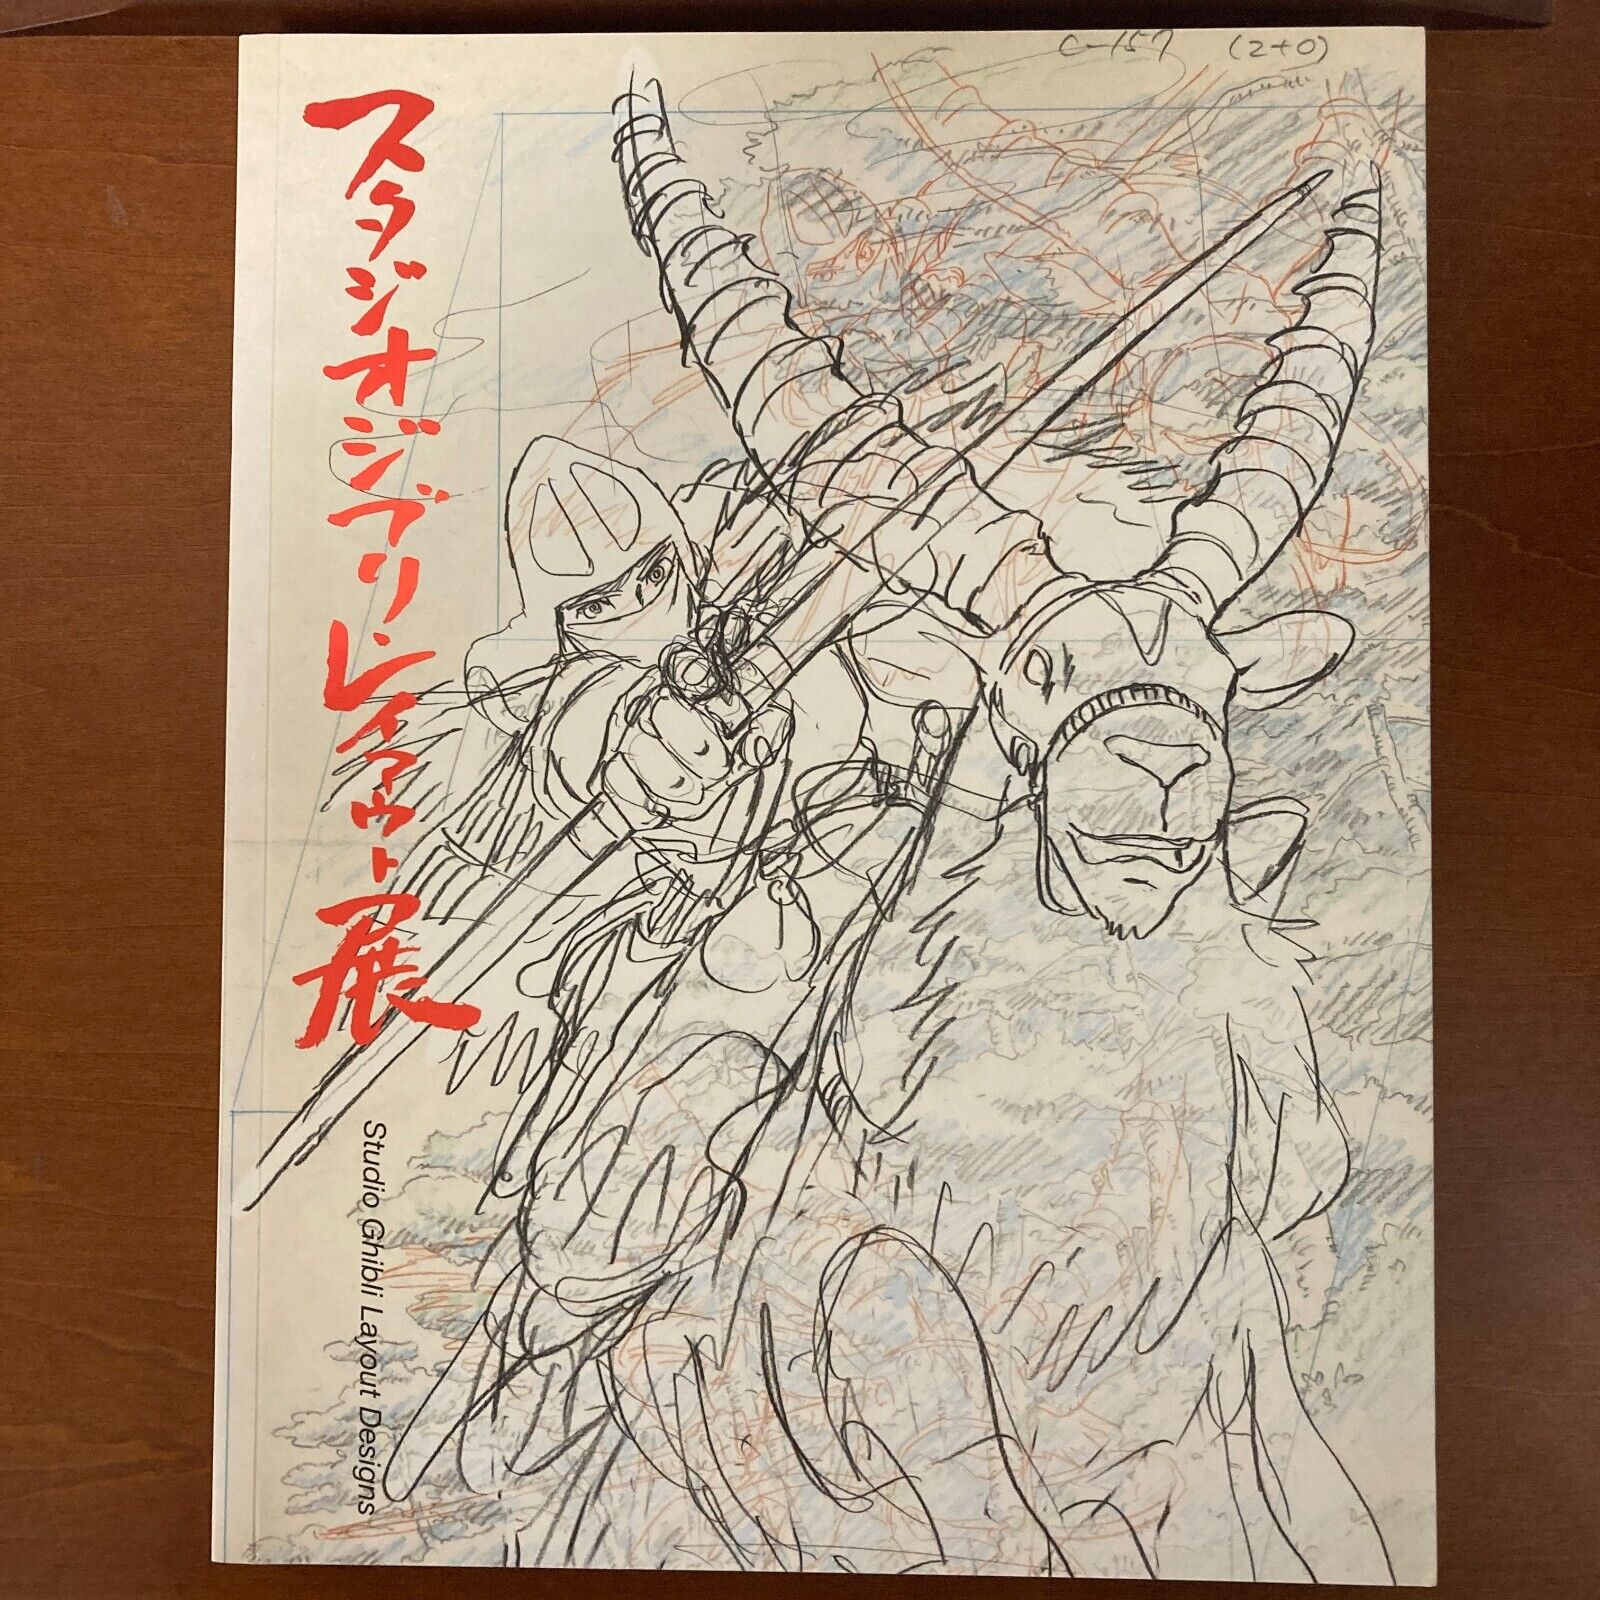 Studio Ghibli Layout Design Exhibition Art Book Hayao Miyazaki Illustration